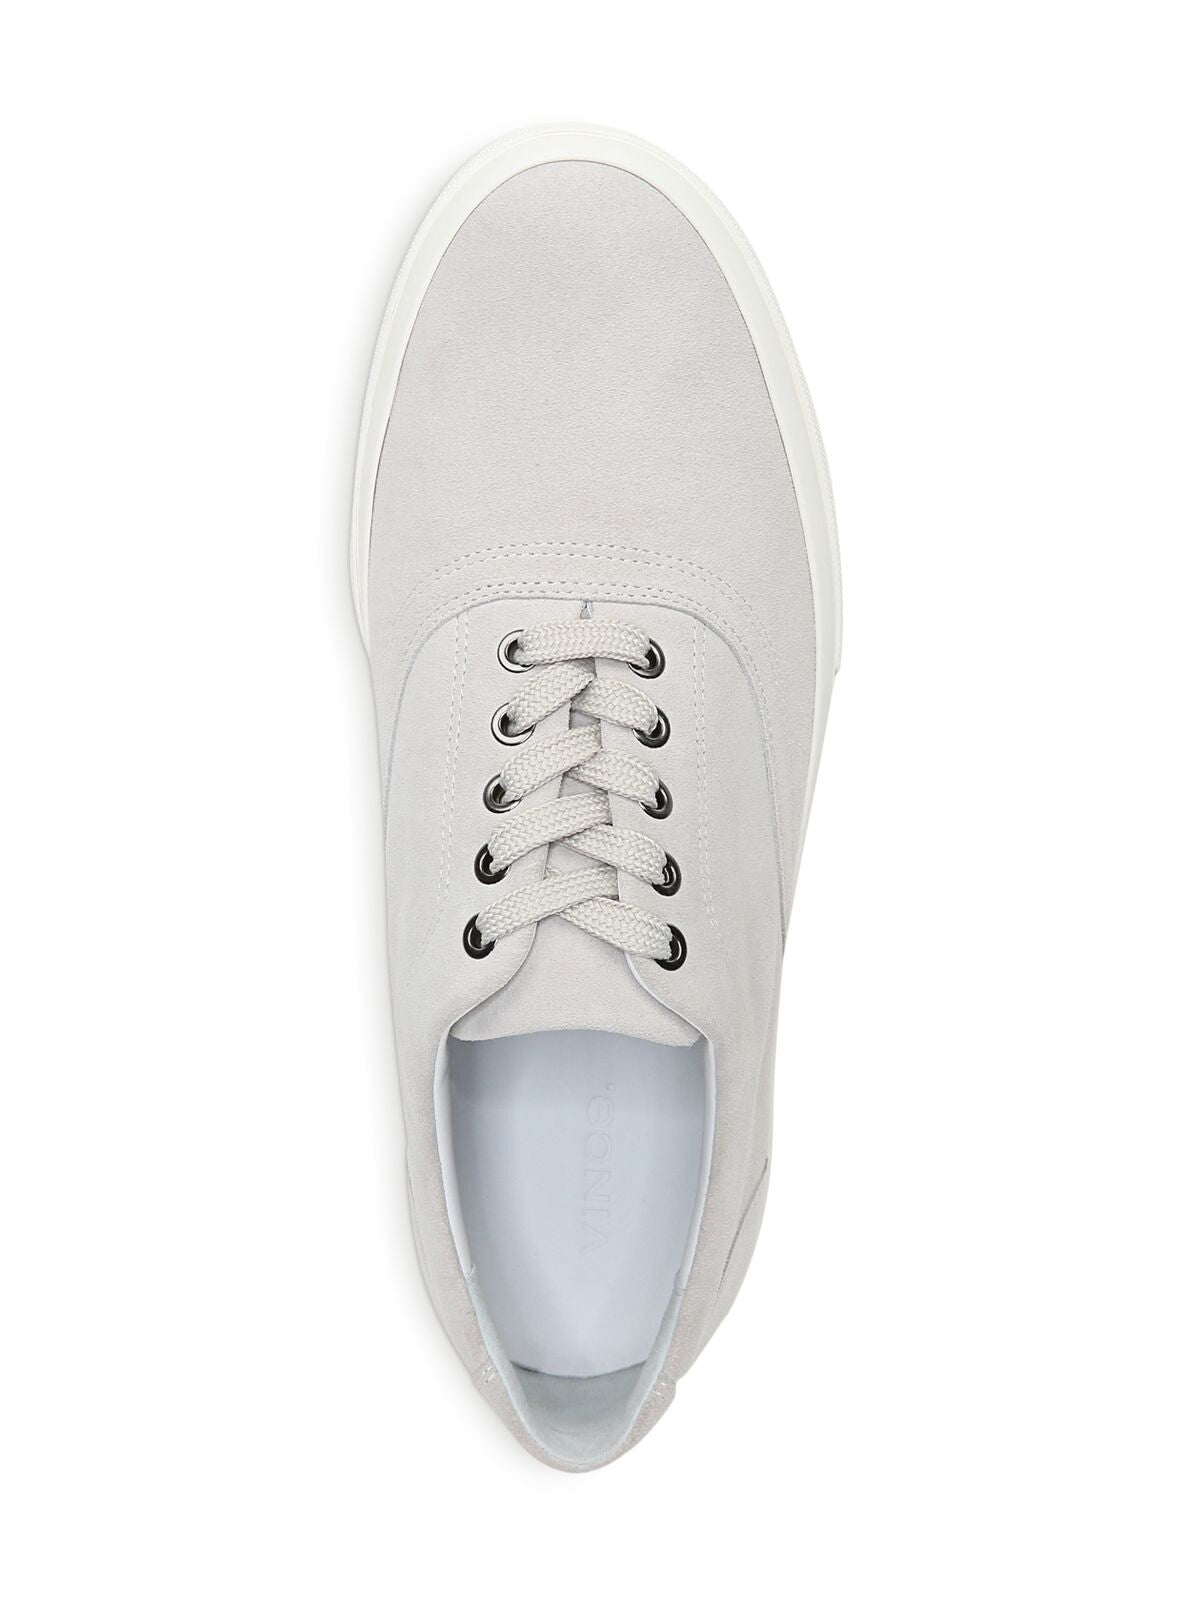 VINCE. Mens Gray Fullington Round Toe Platform Lace-Up Leather Athletic Sneakers Shoes 8.5 M